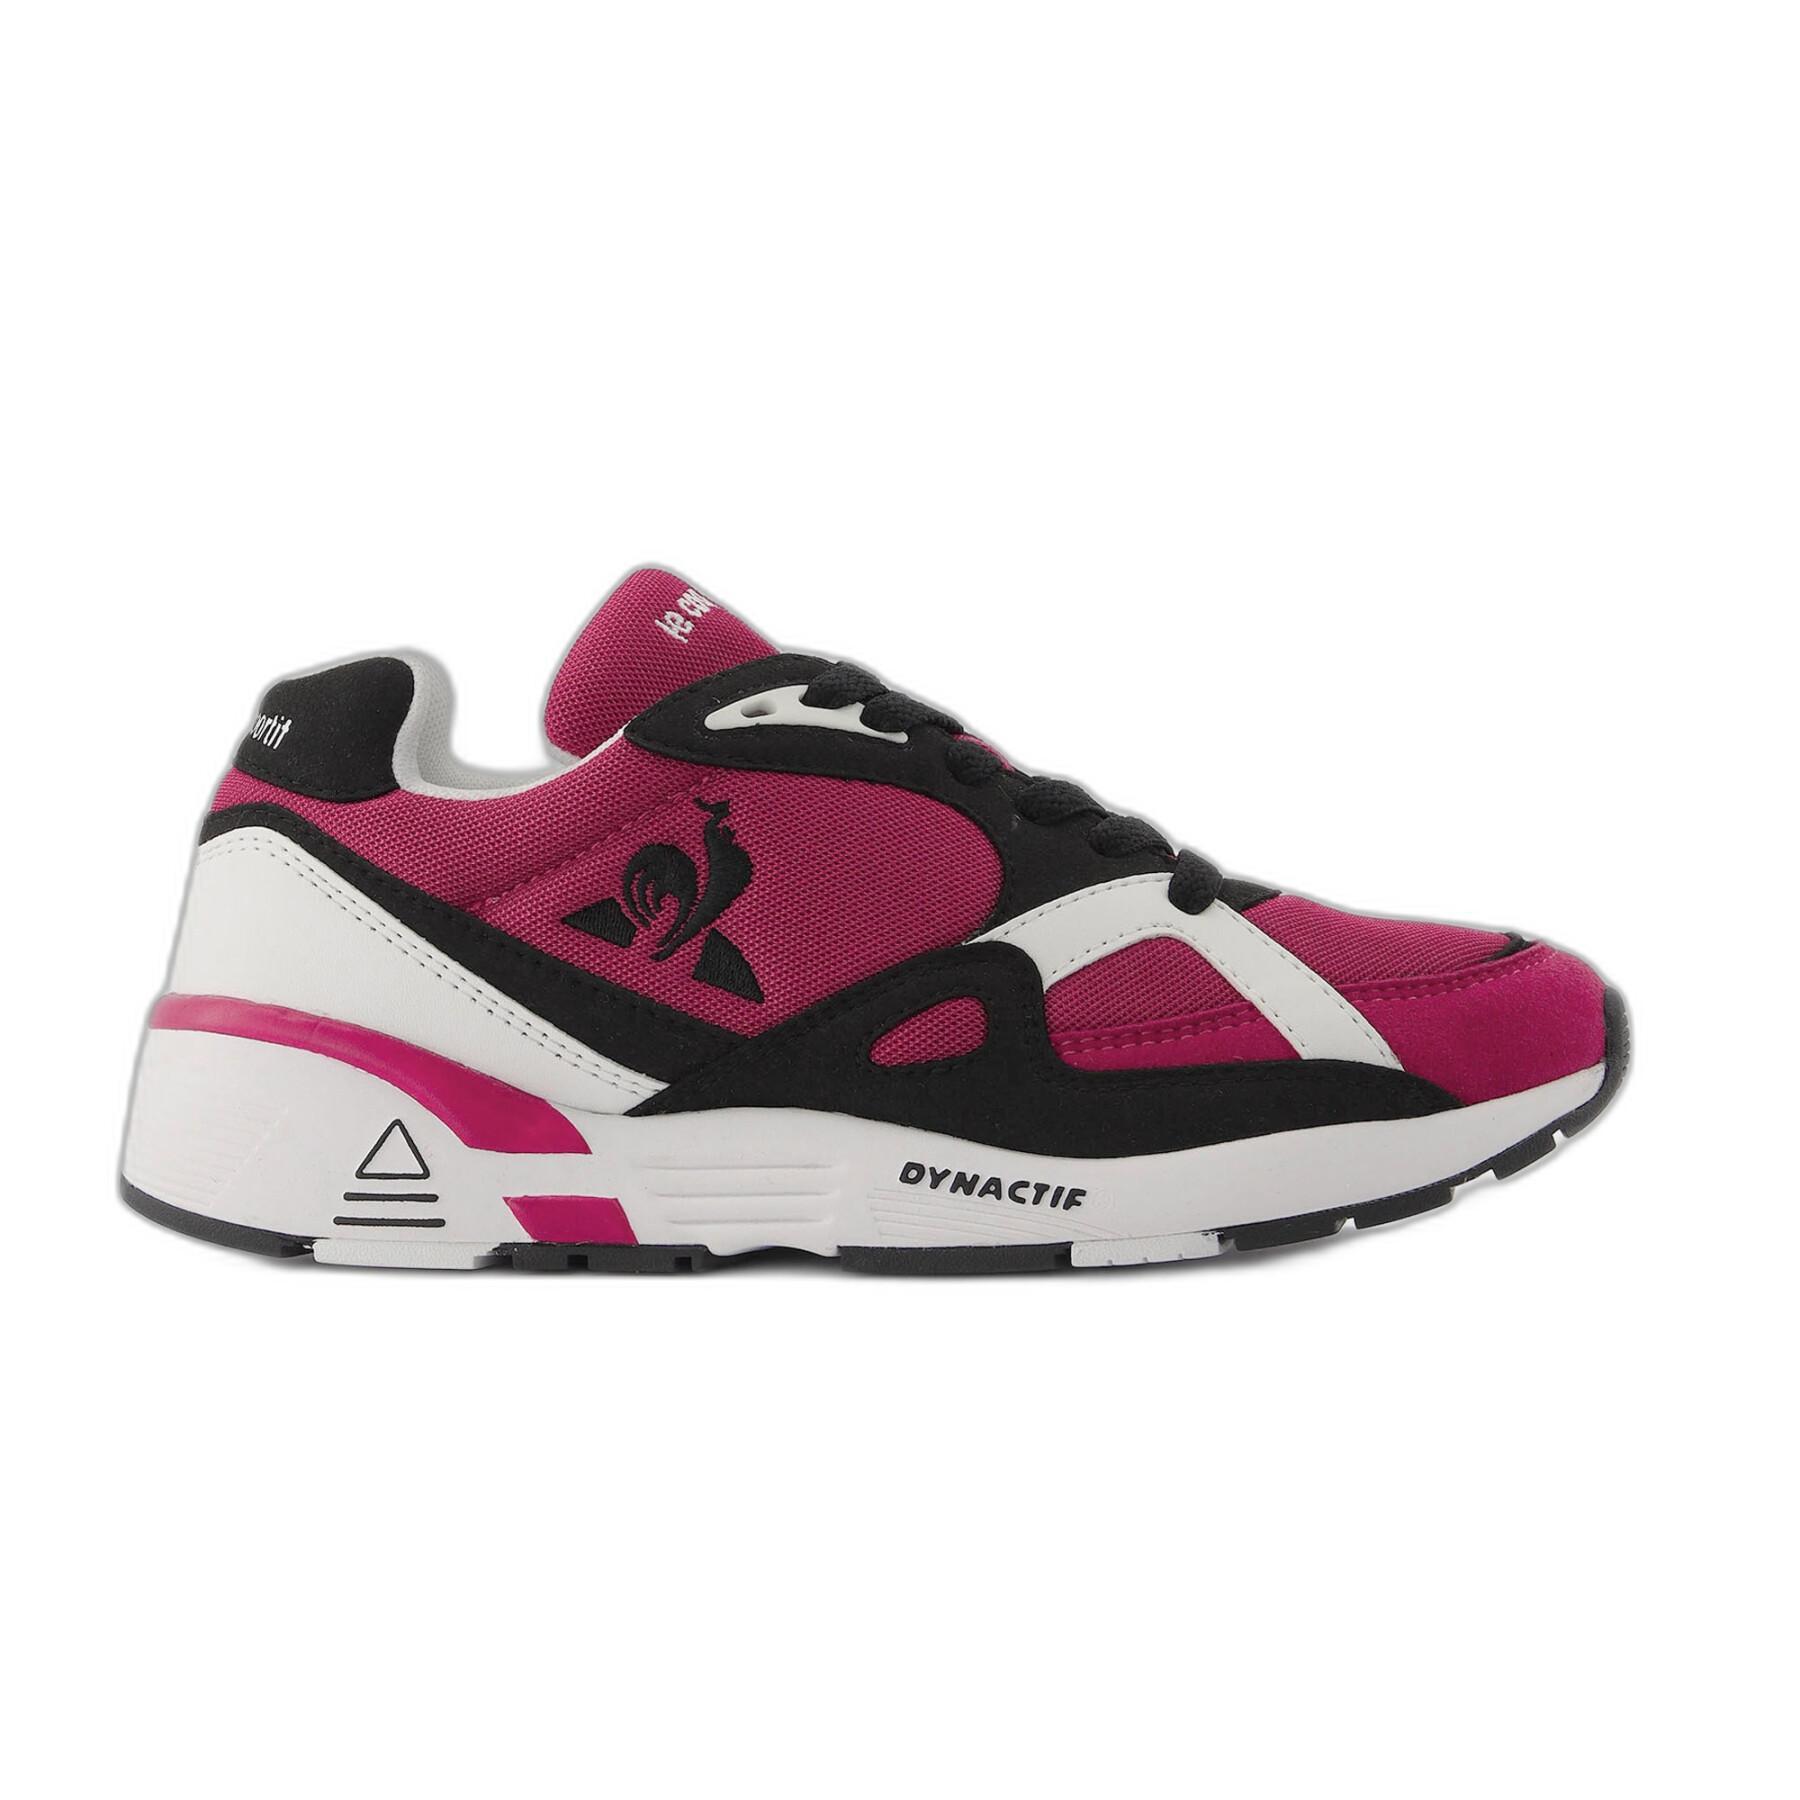 Sneakers für Frauen Le Coq Sportif R850